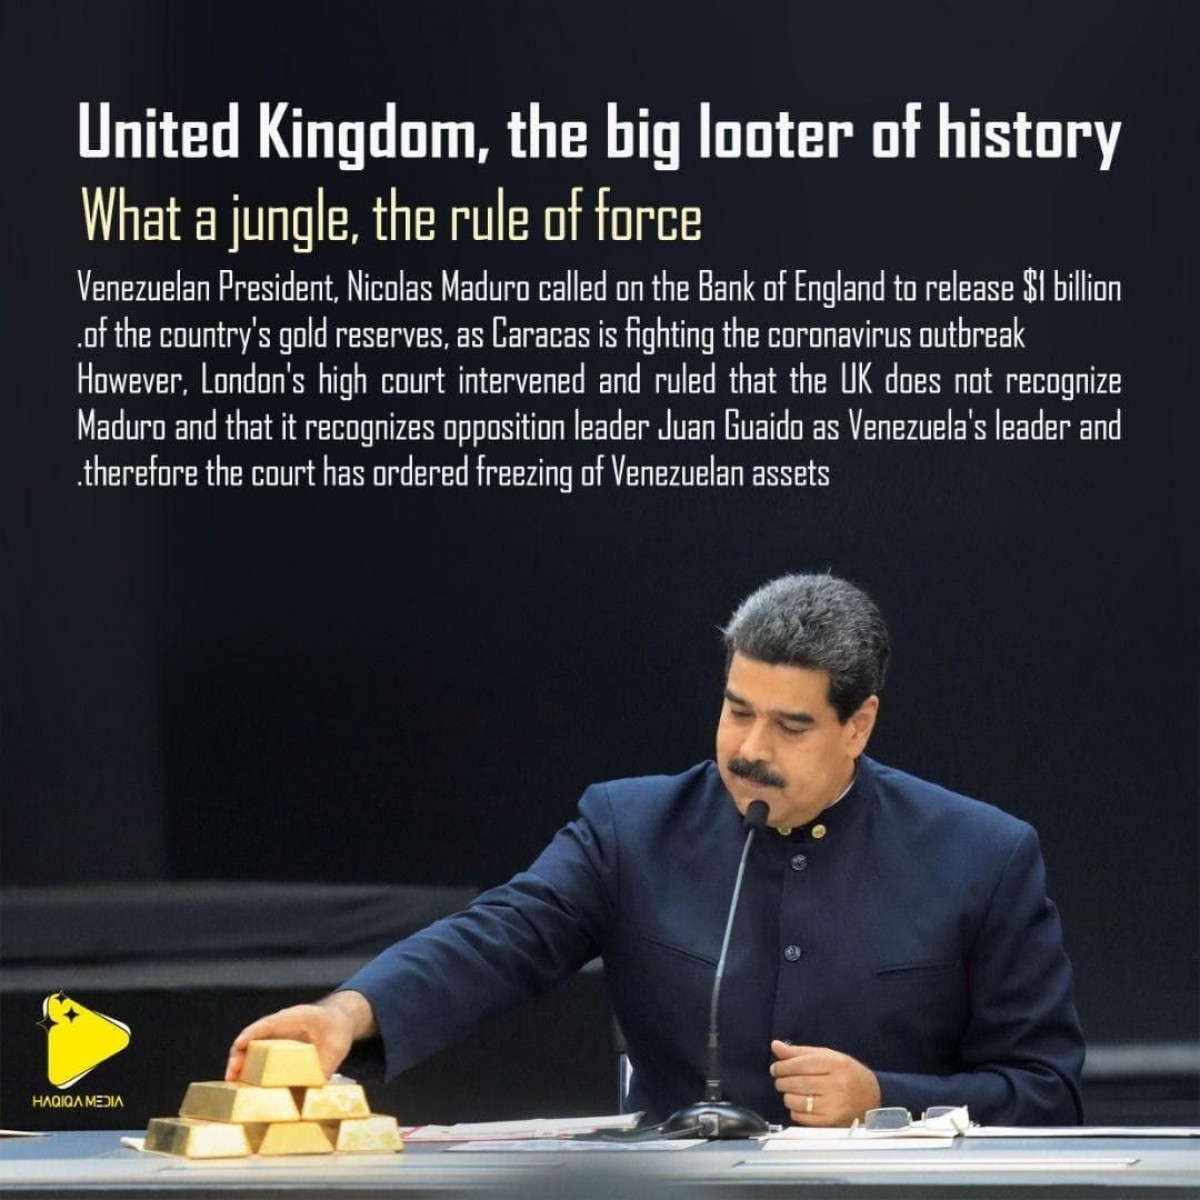 United Kingdom, the big looter of history